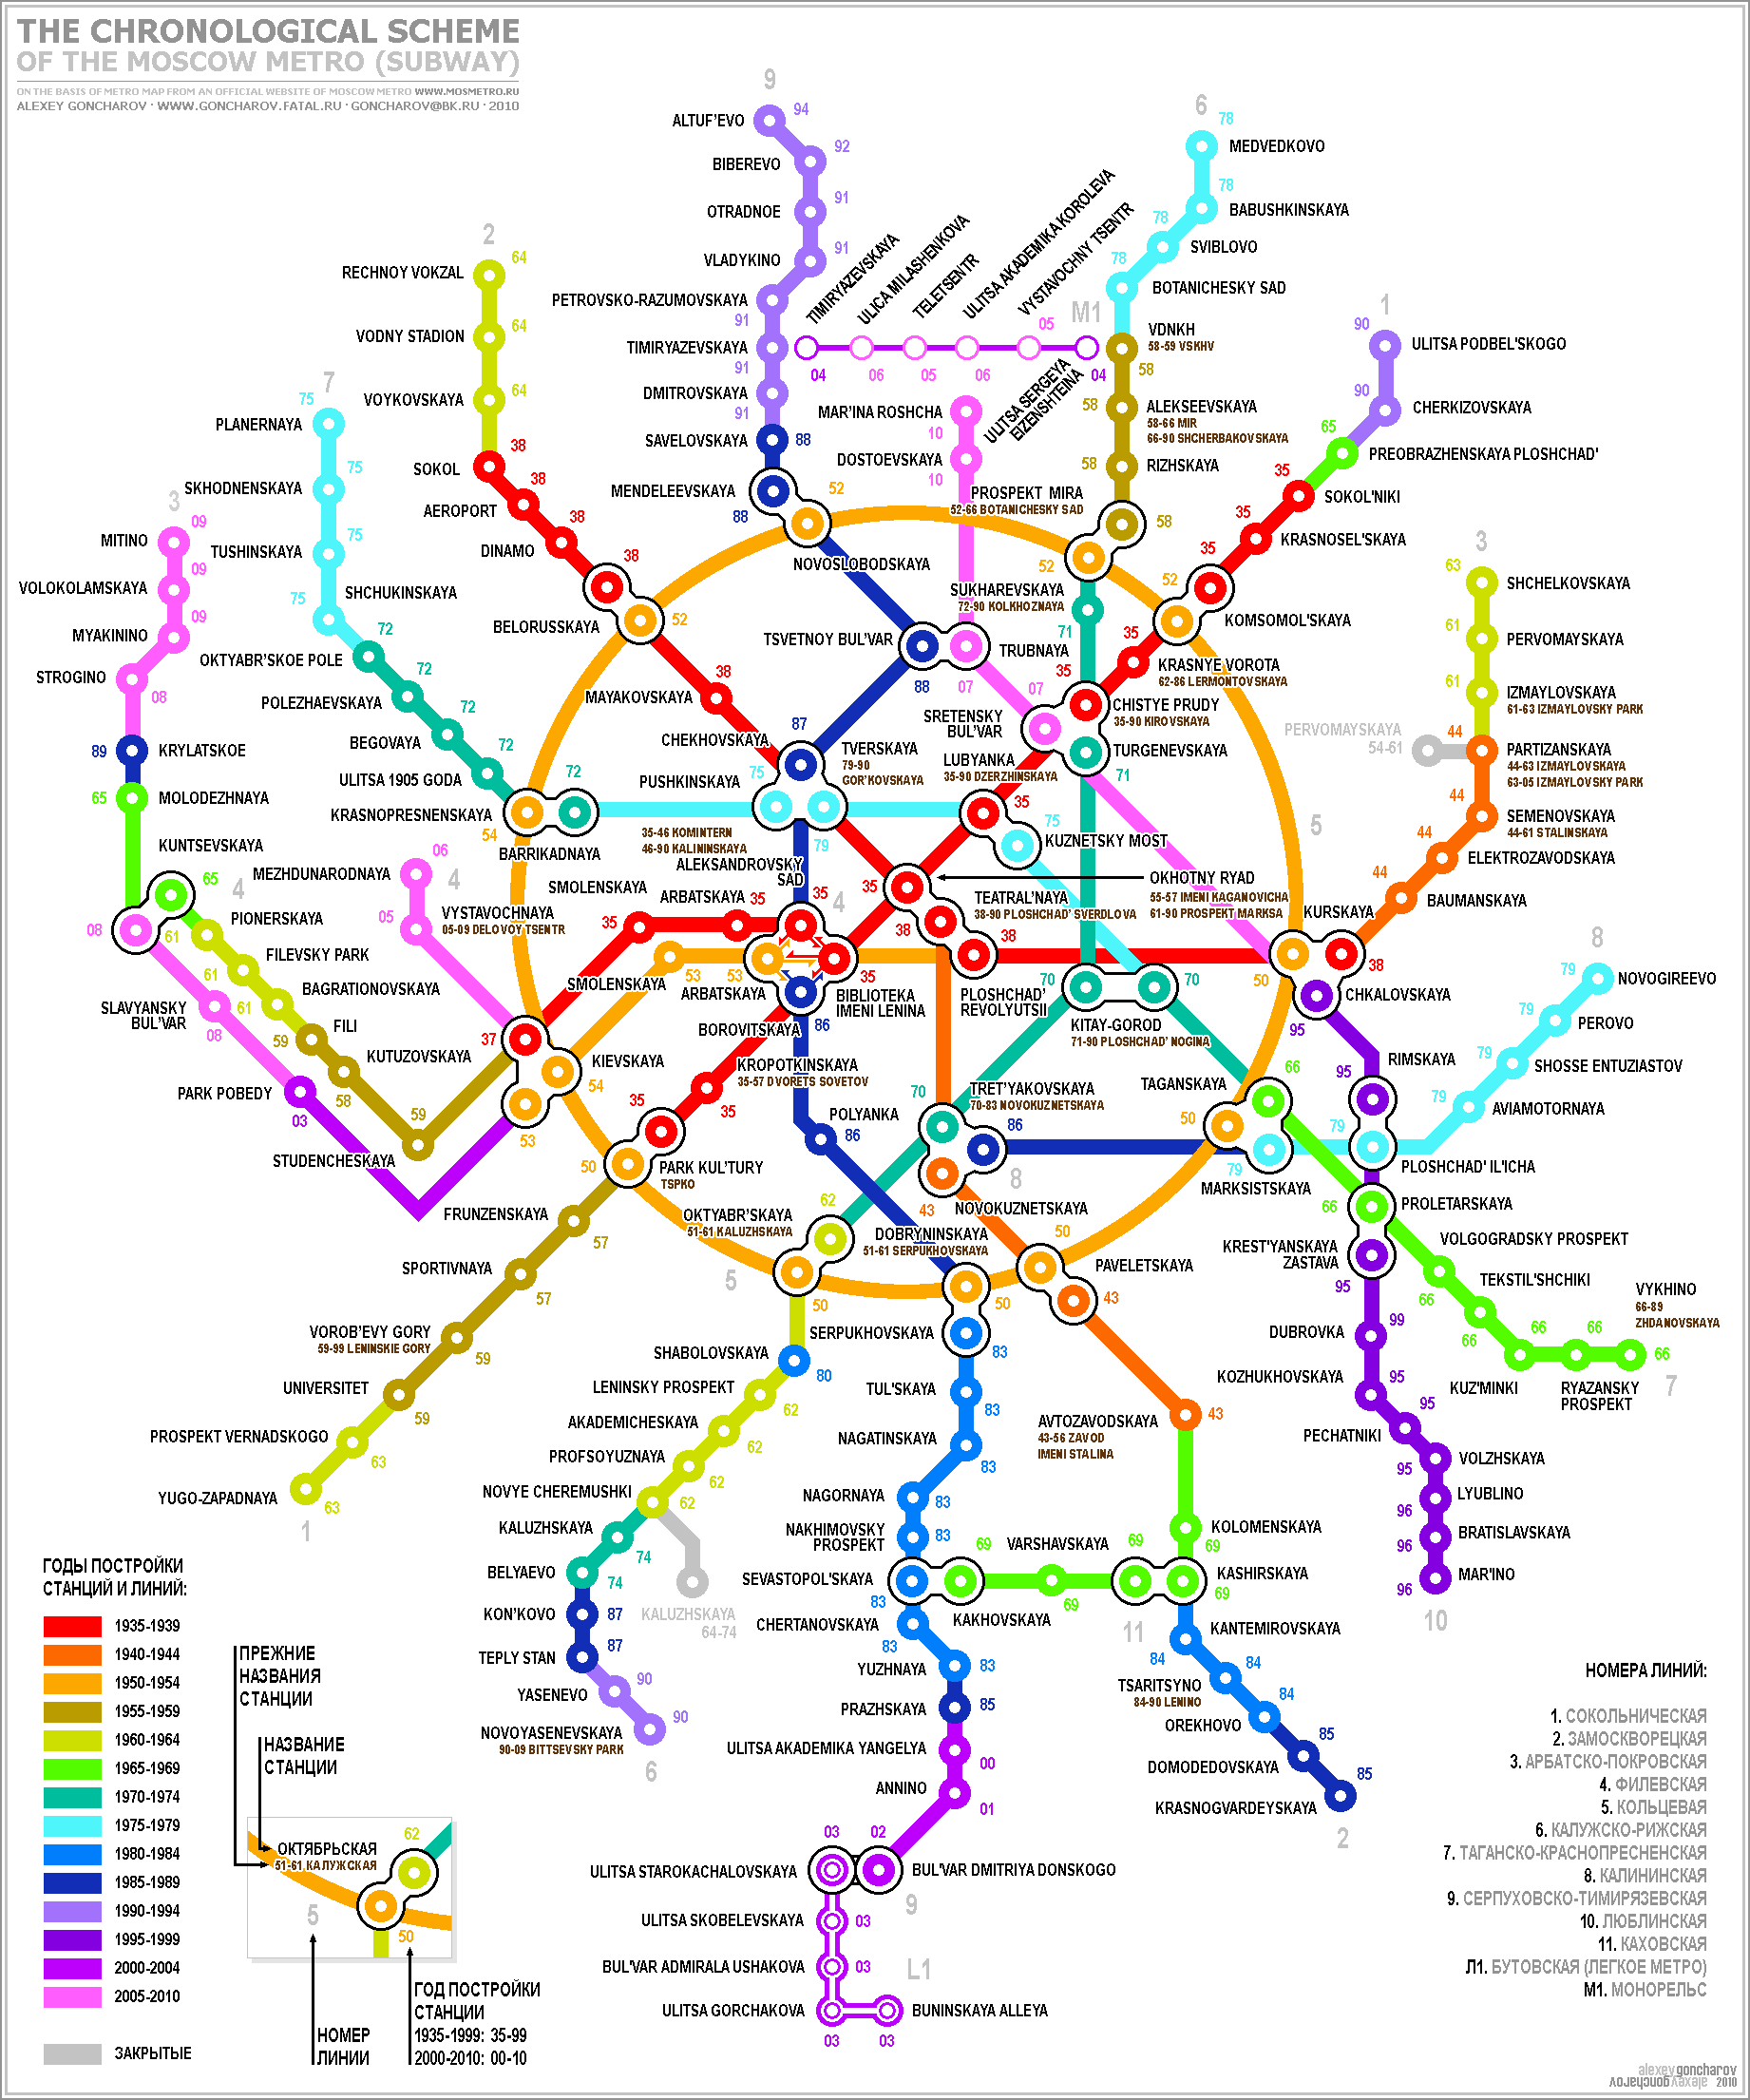 goncharov fatal ru mos metro chronological 2010 english Russia Subway Map